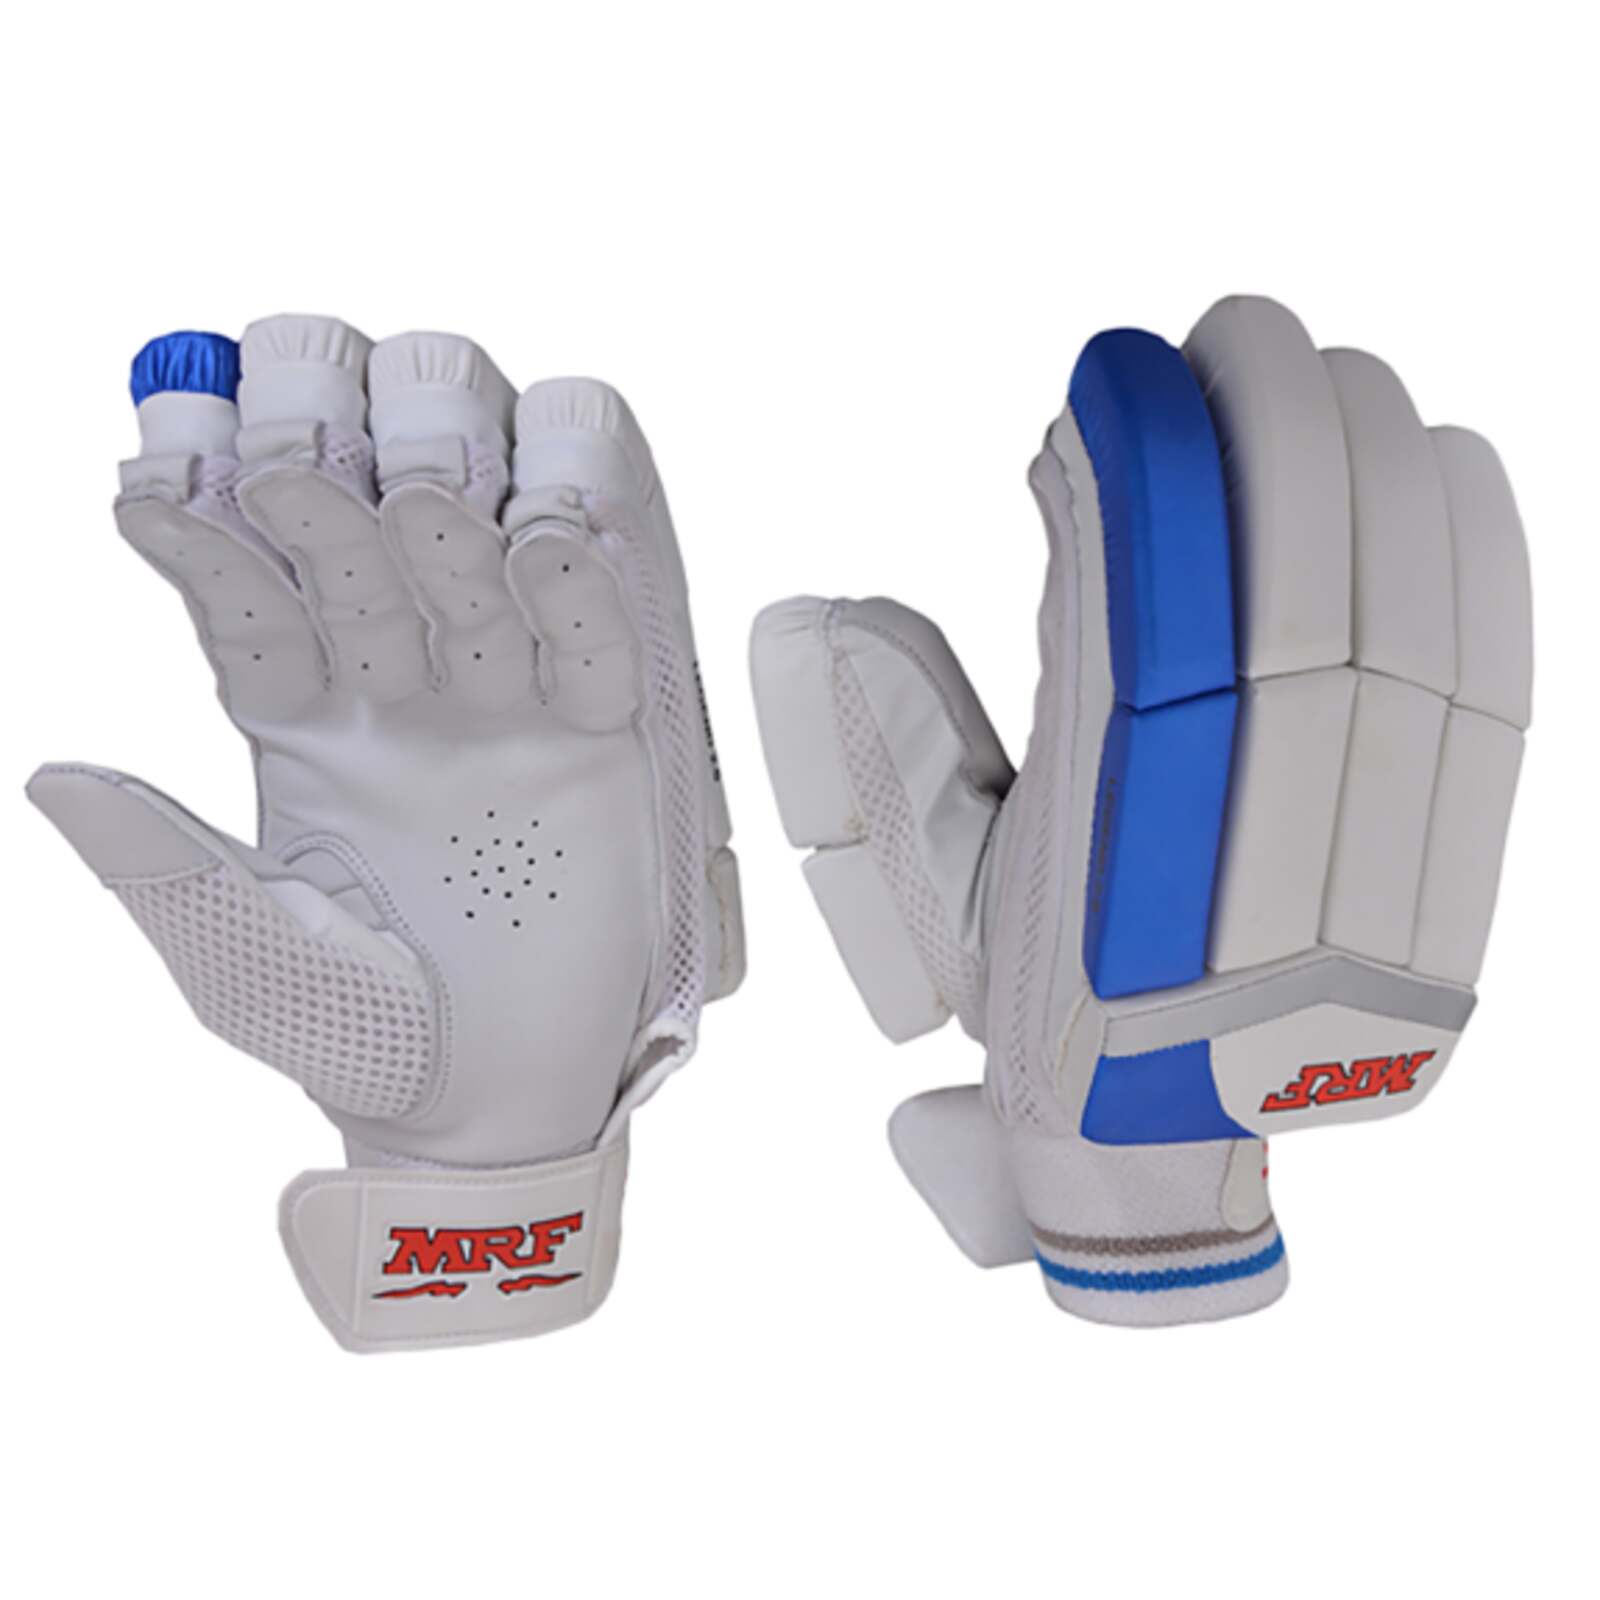 MRF Legend VK18 2.0 Batting Gloves - Junior